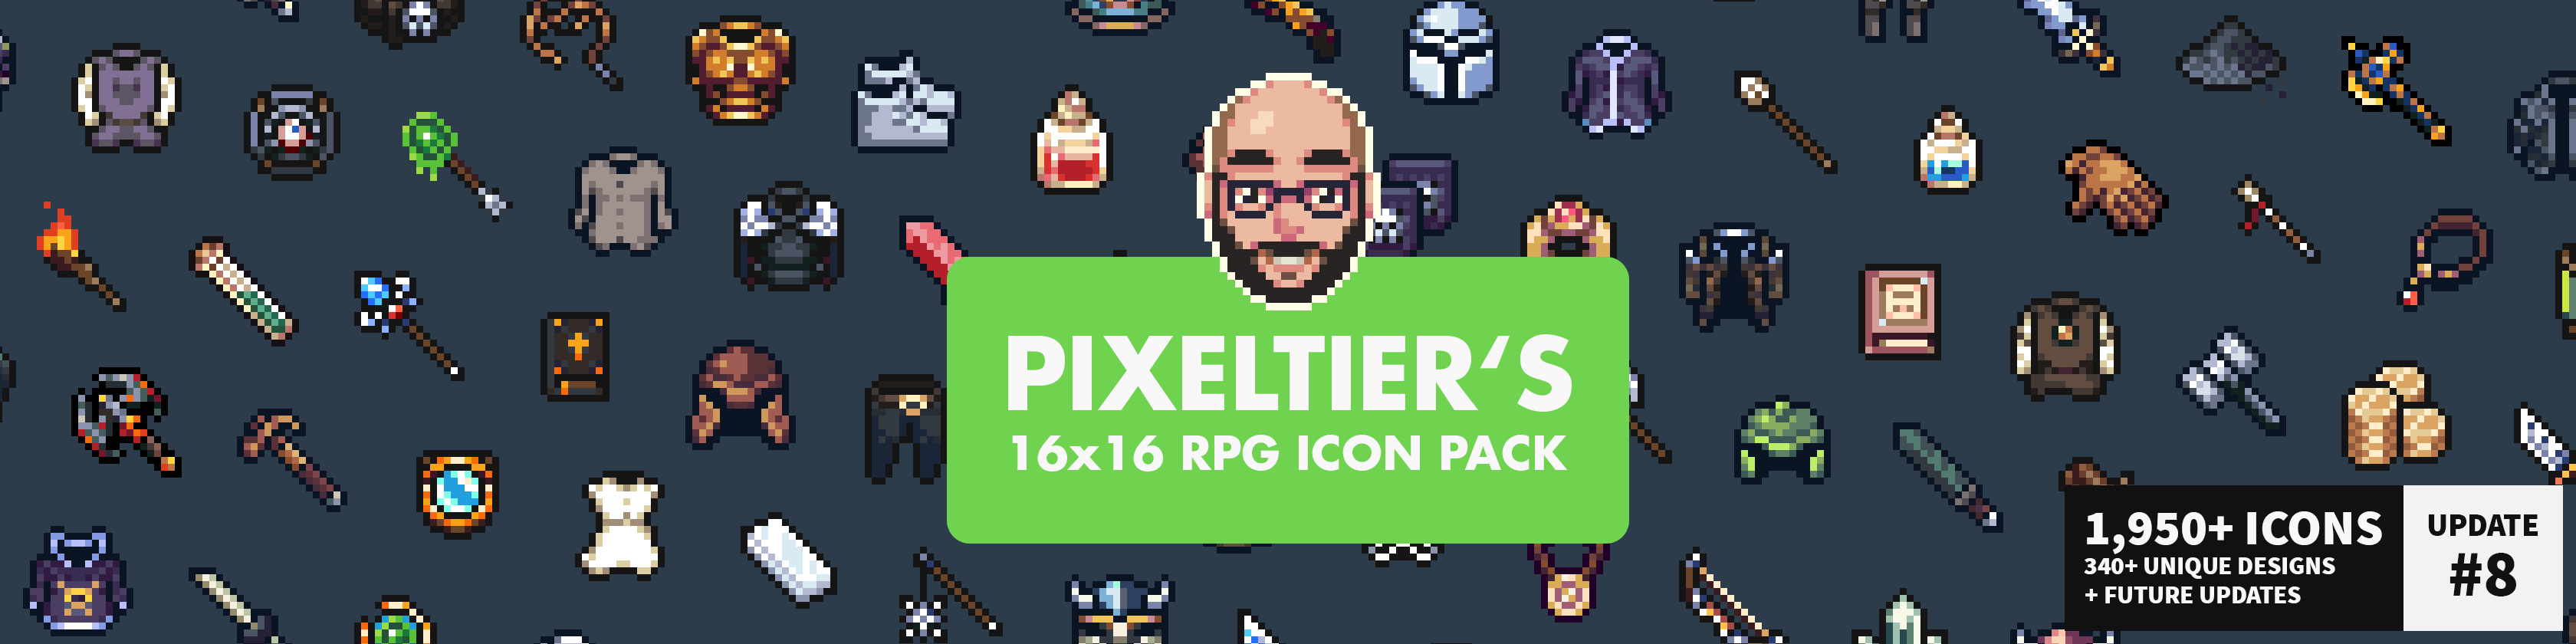 Pixeltier's 16x16 RPG Icon Pack